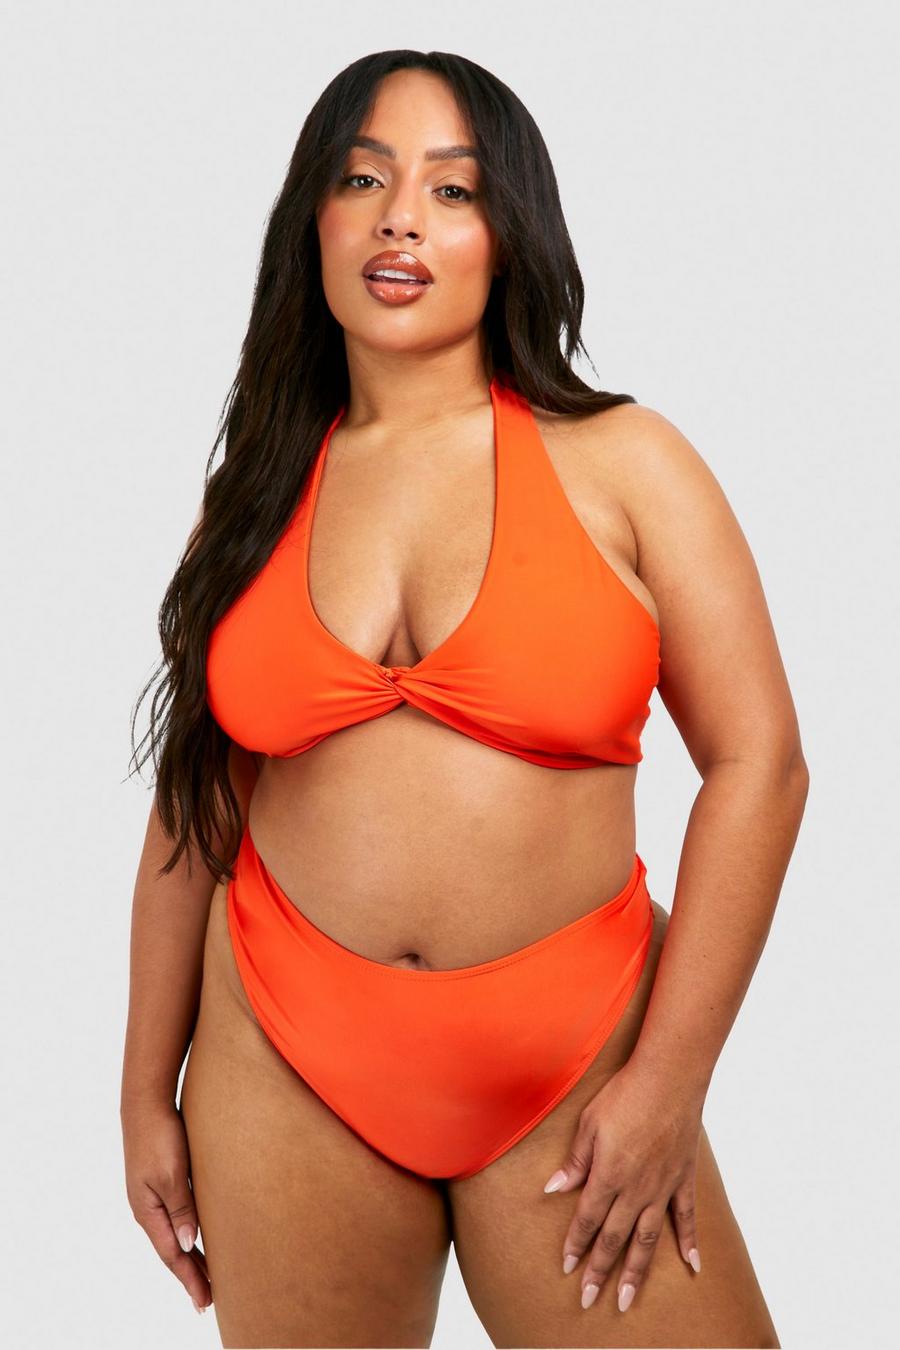 Two Piece Gradient Orange Swimsuit Plus Size Tube Top Skirt Bathing Suit  High Waist Bikini for Women Wholesale Swimwear Design Bikinis - China Bra  and Lingerie price